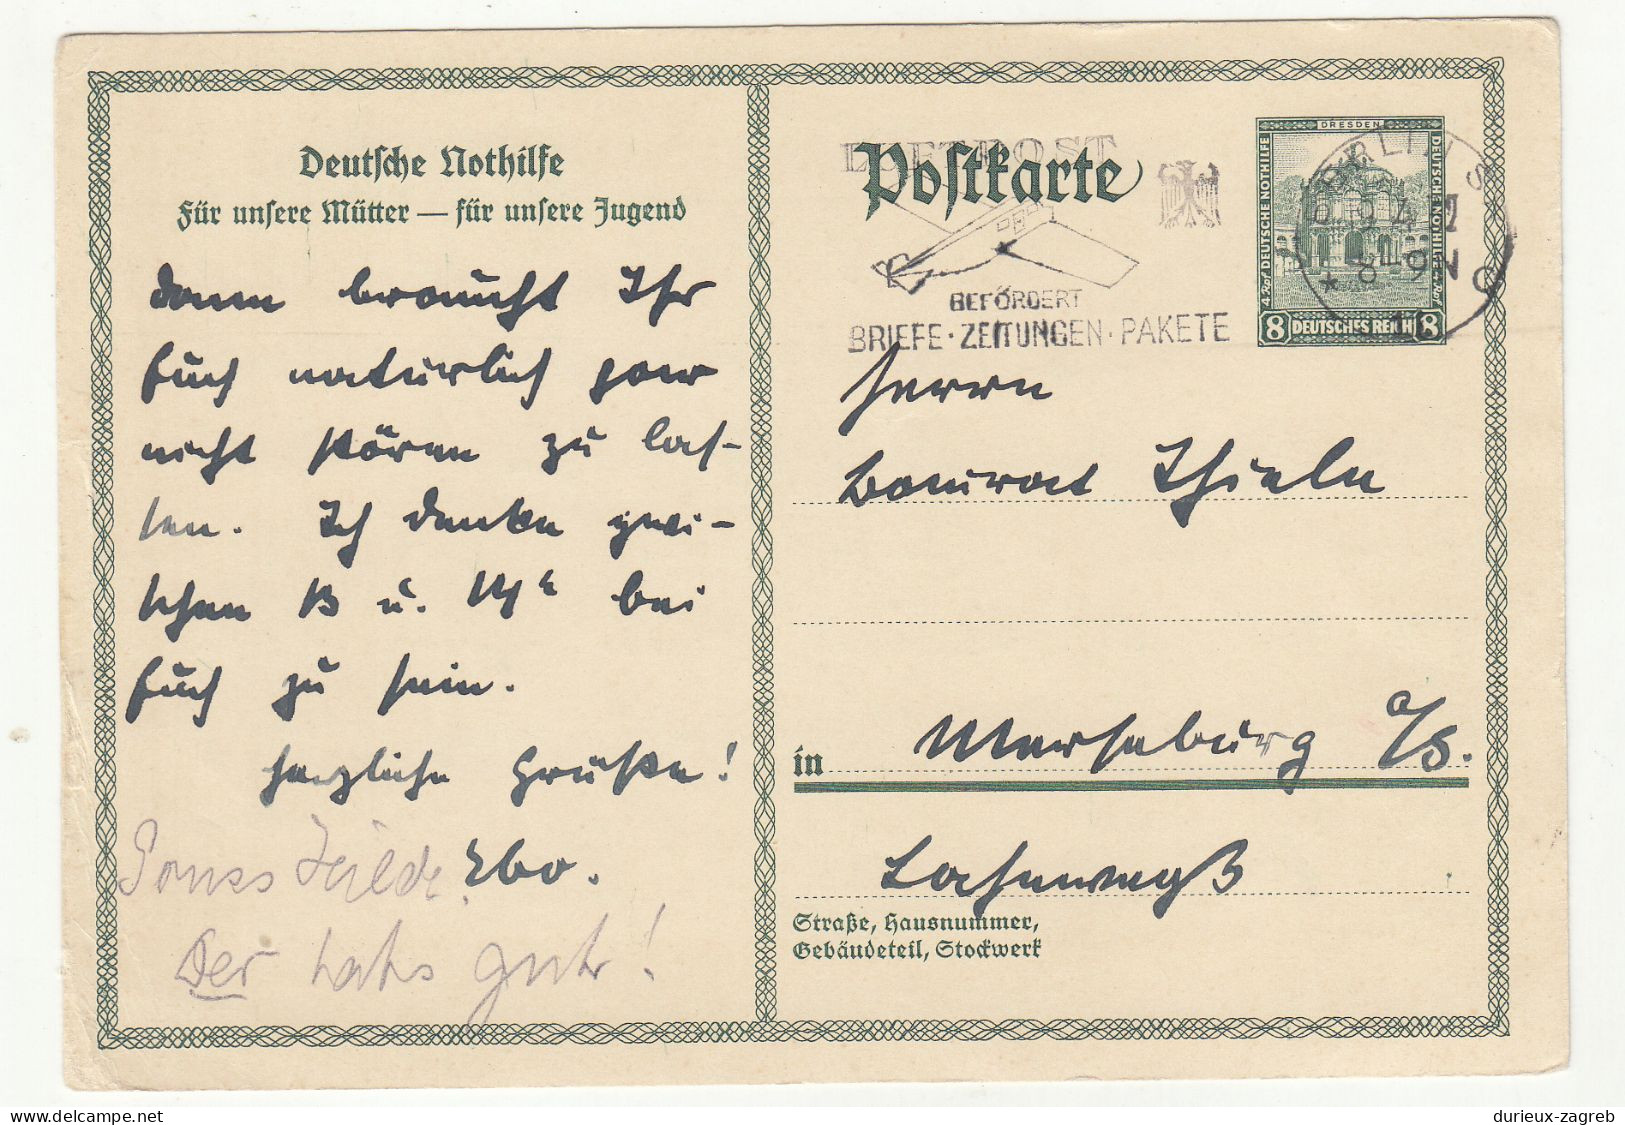 Germany Deutsche Nothilfe Postal Stationery Postcard Posted 1932 - Luftpost Slogan Postmark B240401 - Cartoline